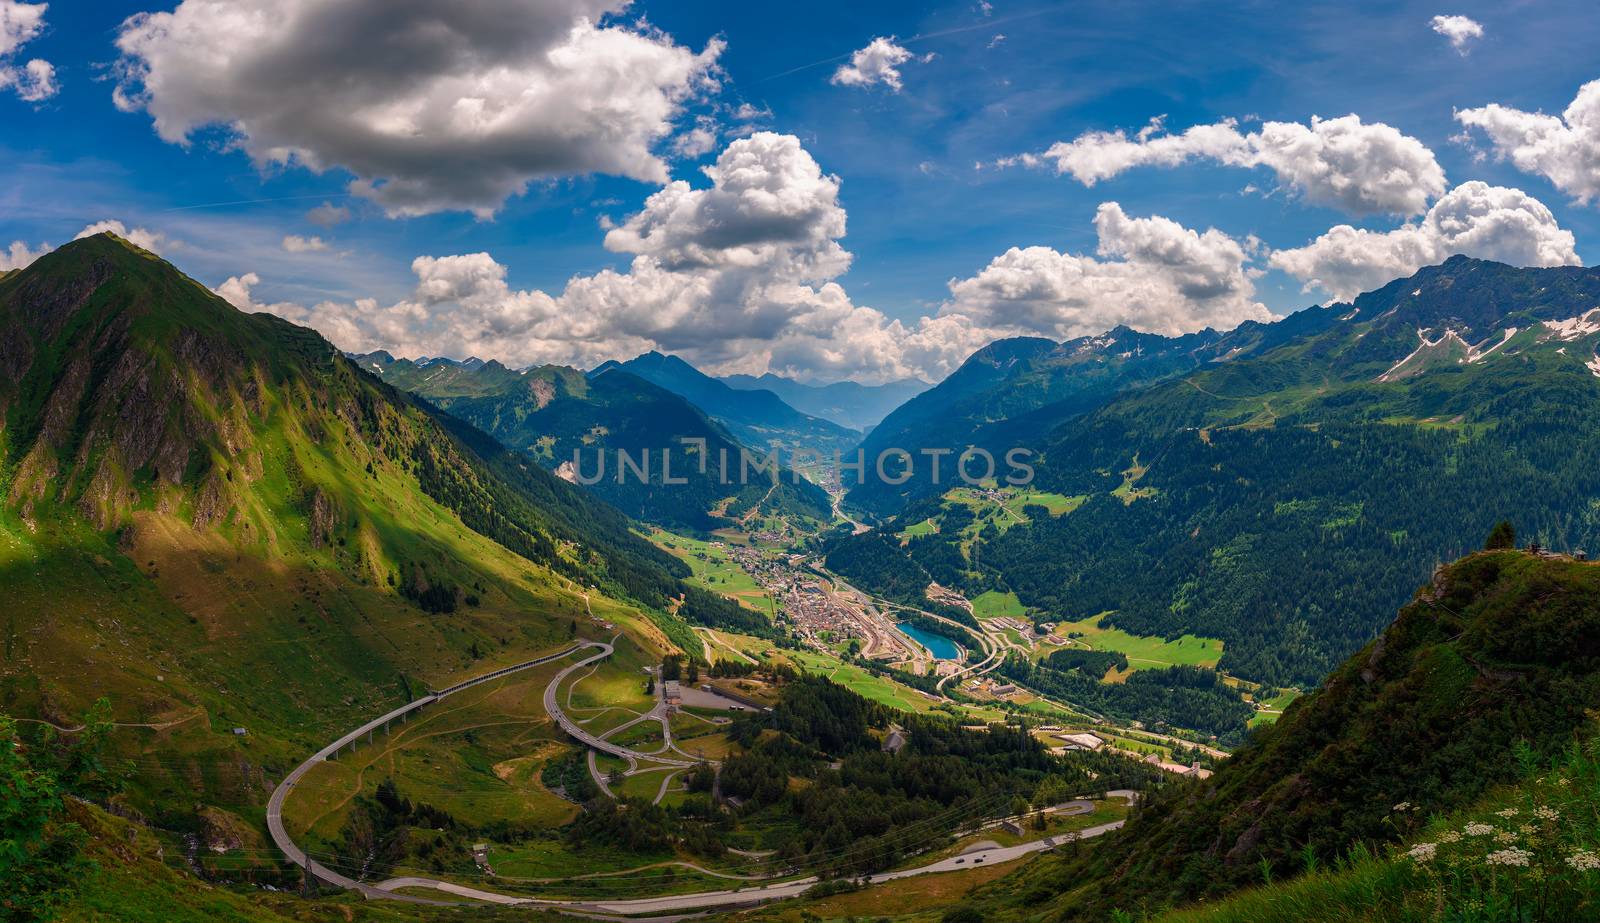 Chiosco Panorama San Gottardo in Switzerland by nickfox